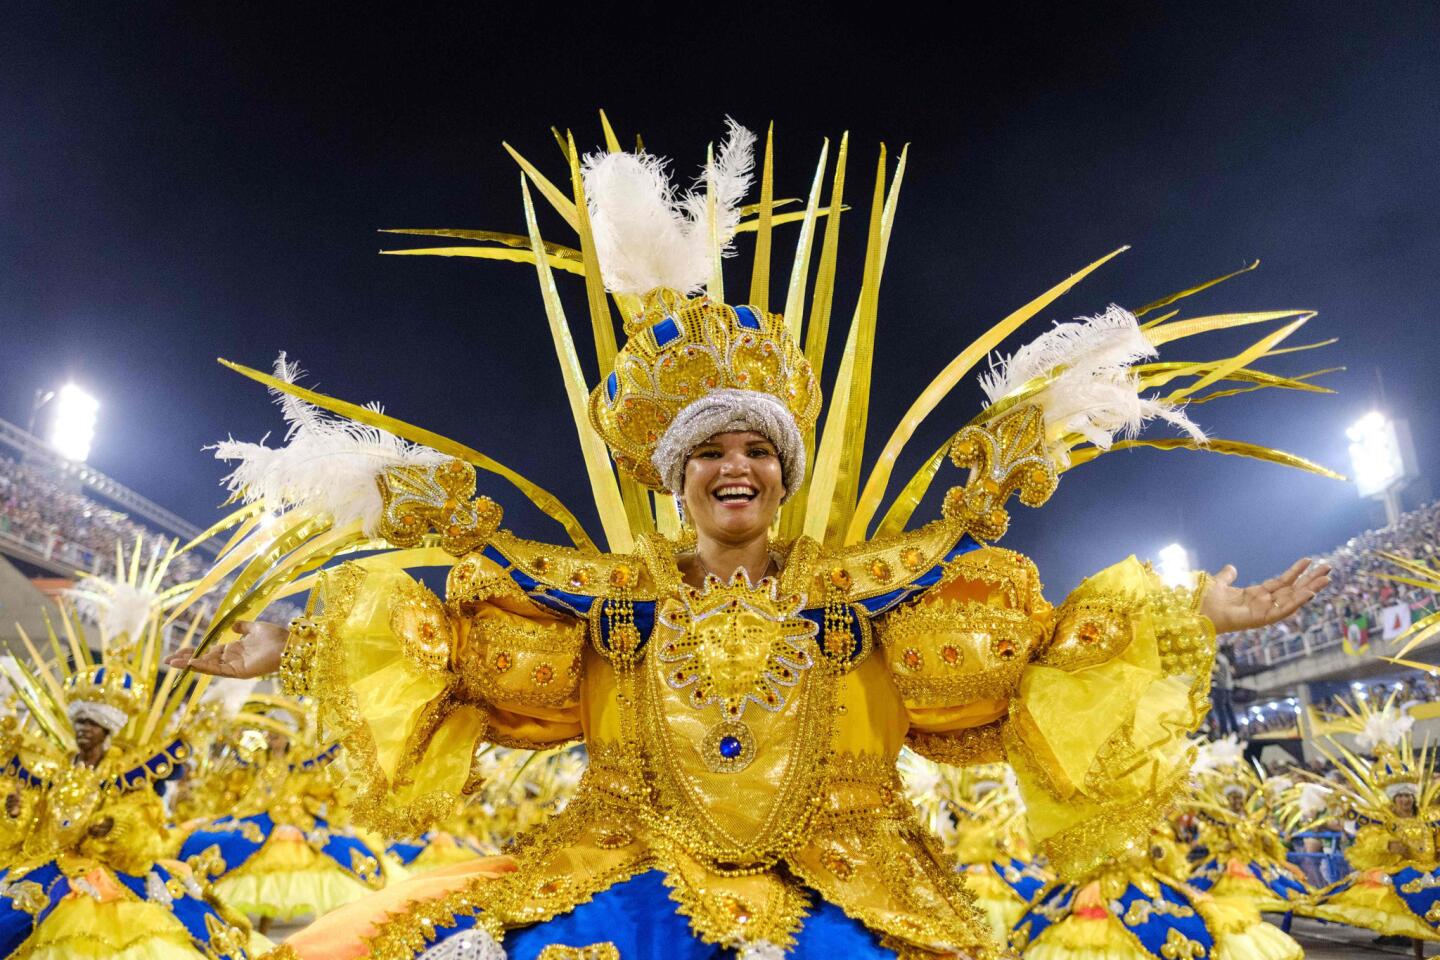 Carnival around the world 2017